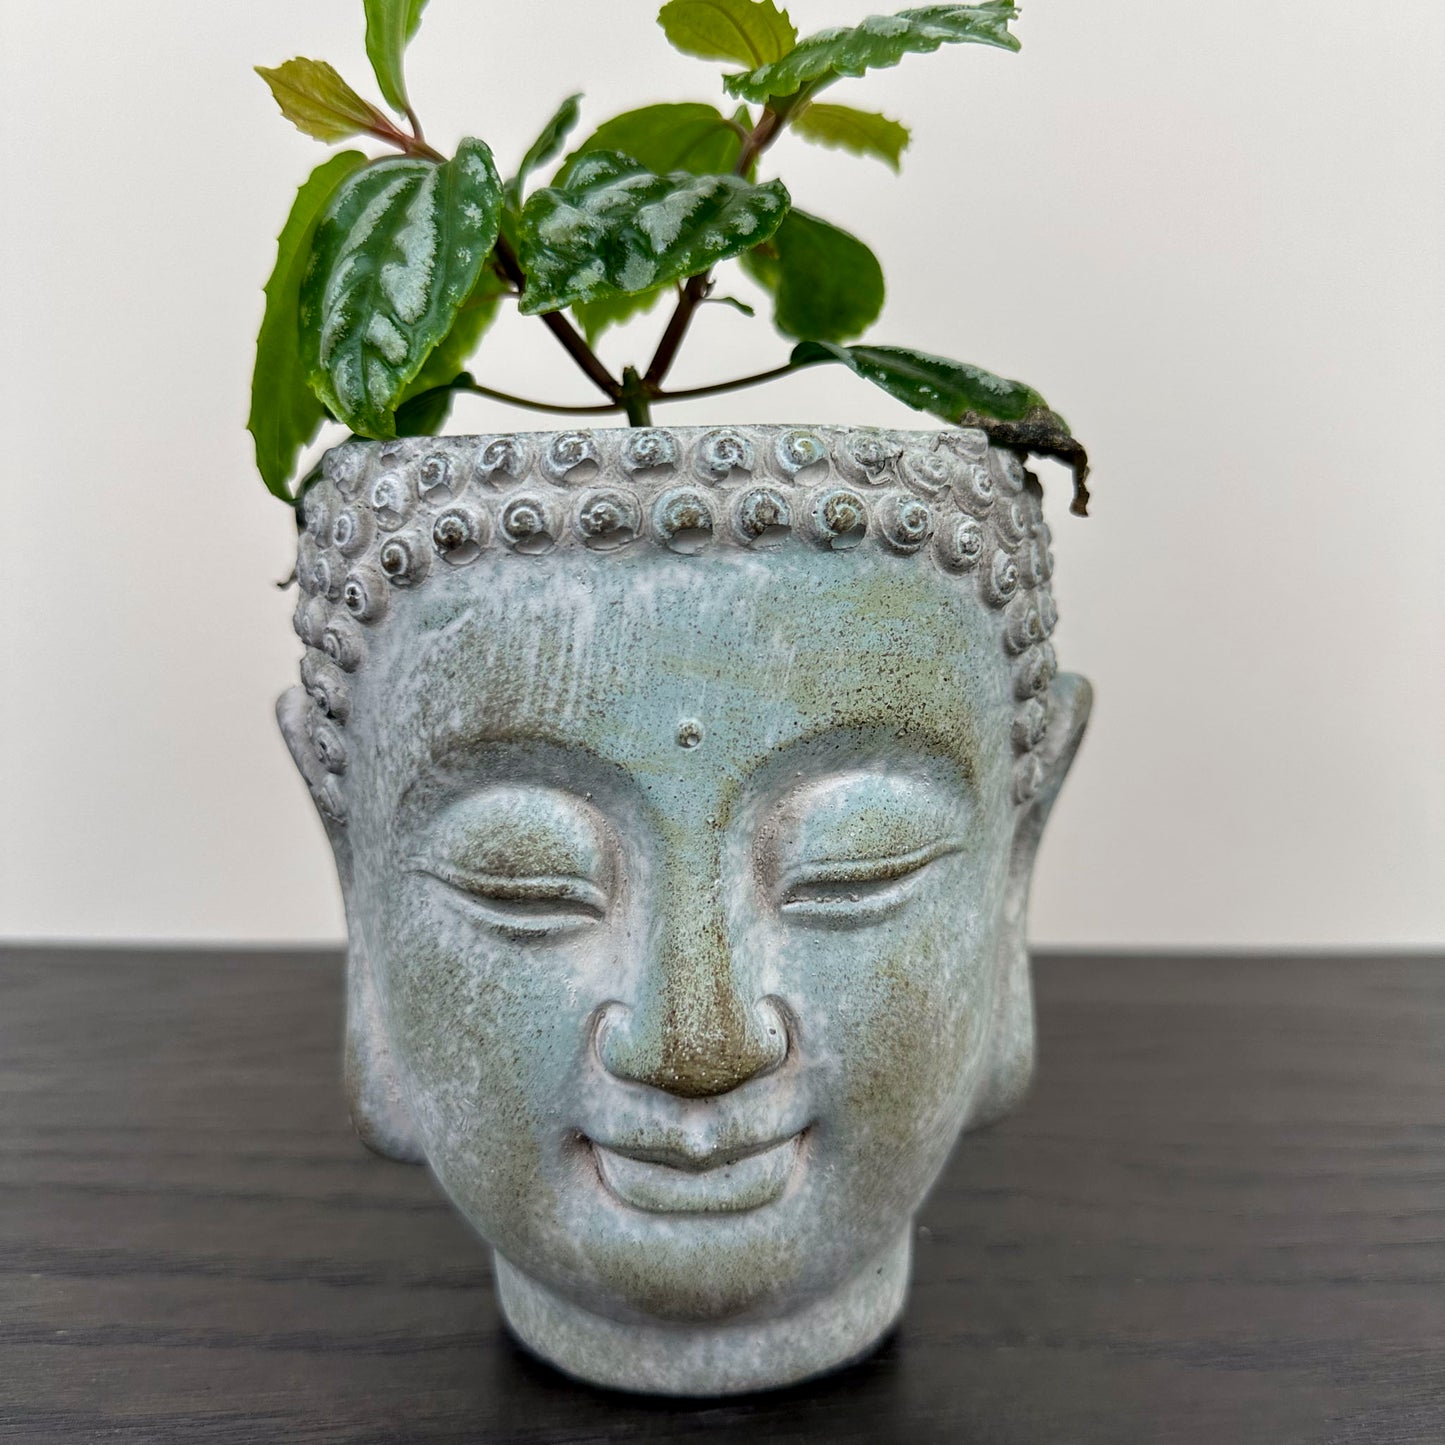 Close up of Buddha head planter holding a pilea 